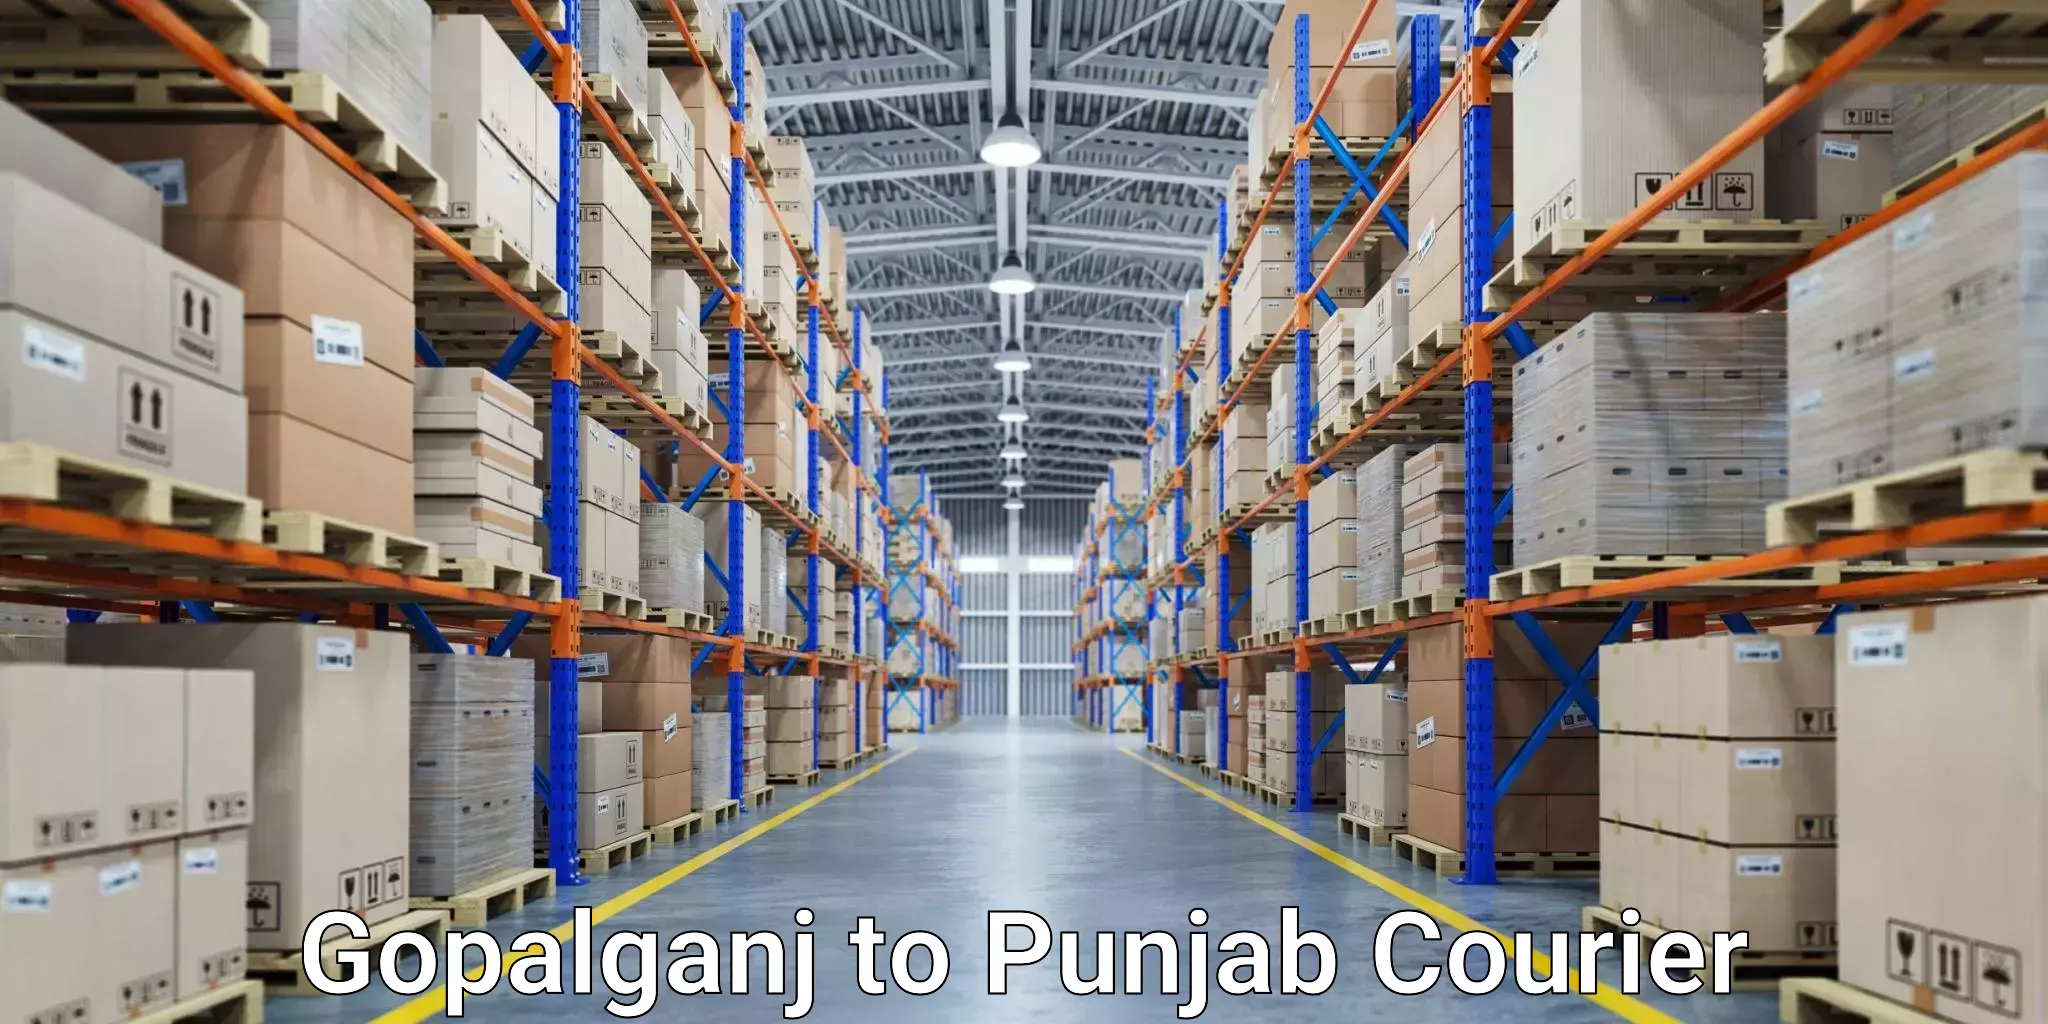 High-capacity parcel service Gopalganj to Abohar